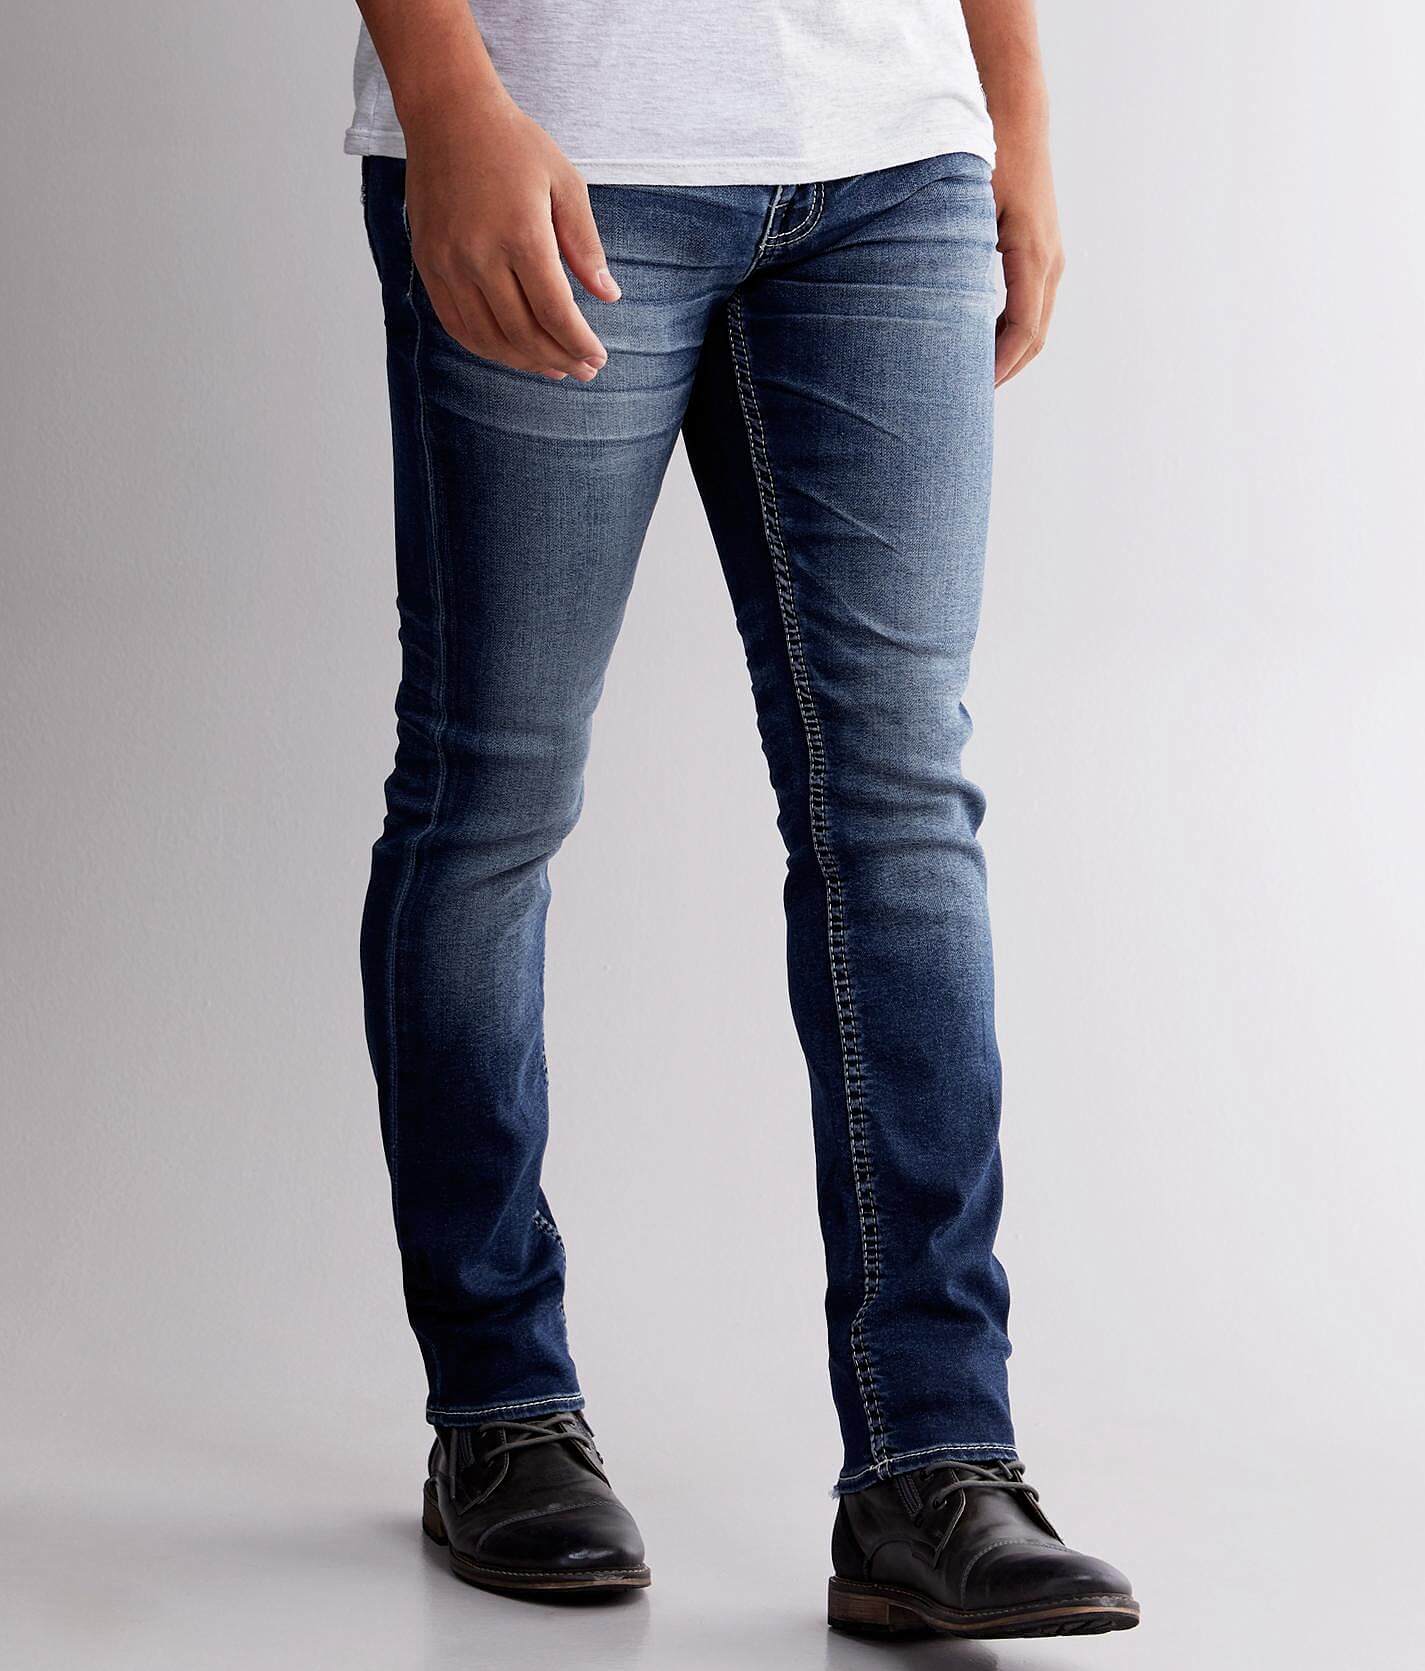 buckle alec jeans